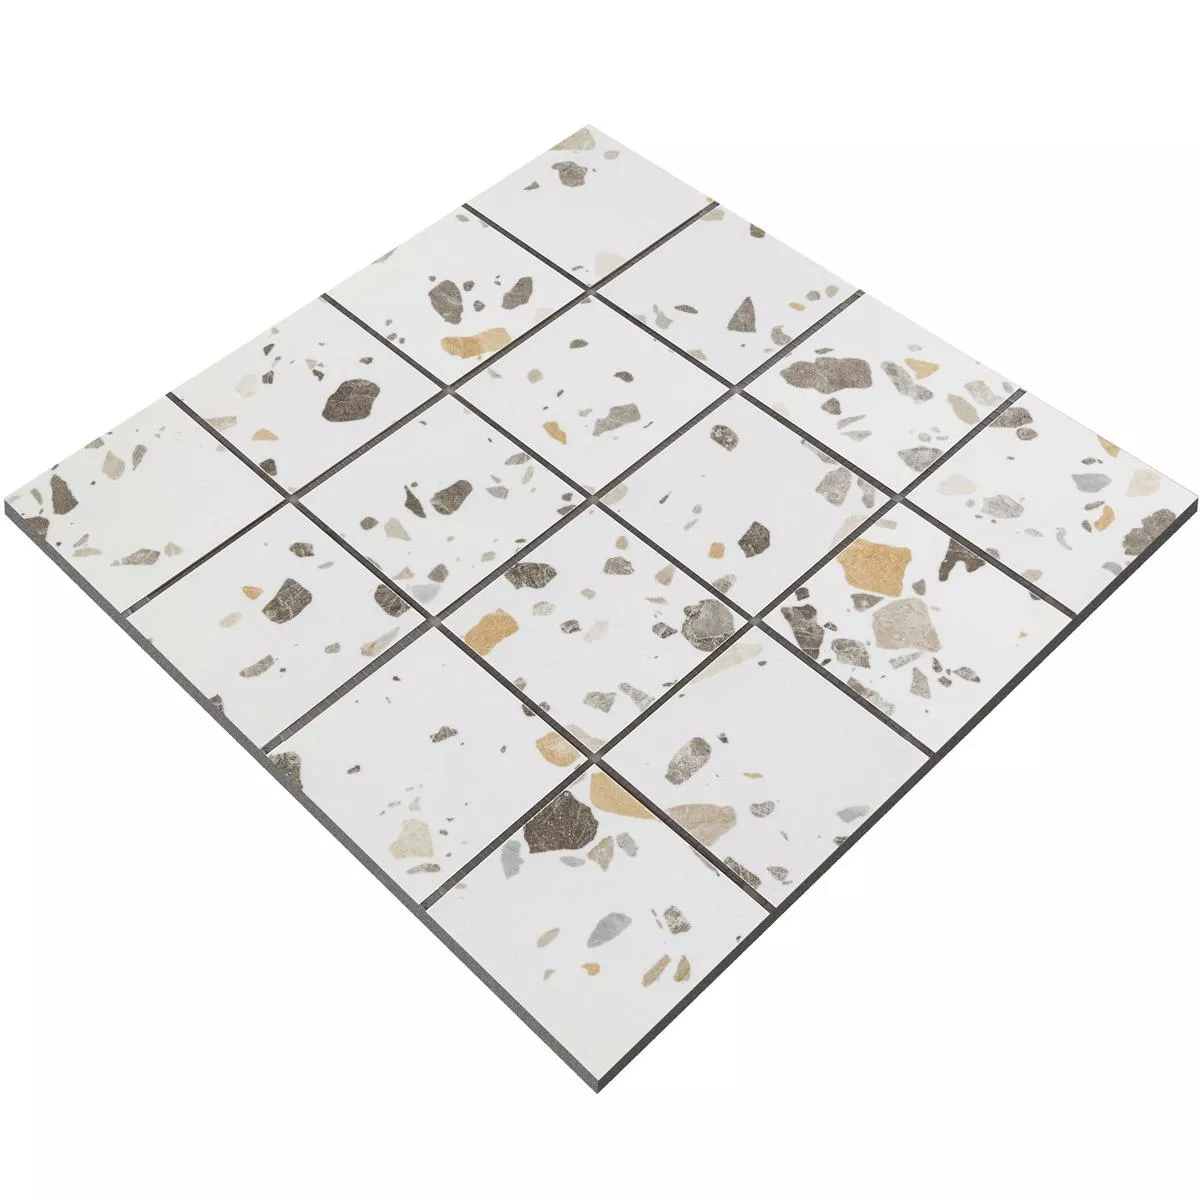 Sample Ceramic Mosaic Tiles Liberty Beige 73x73mm